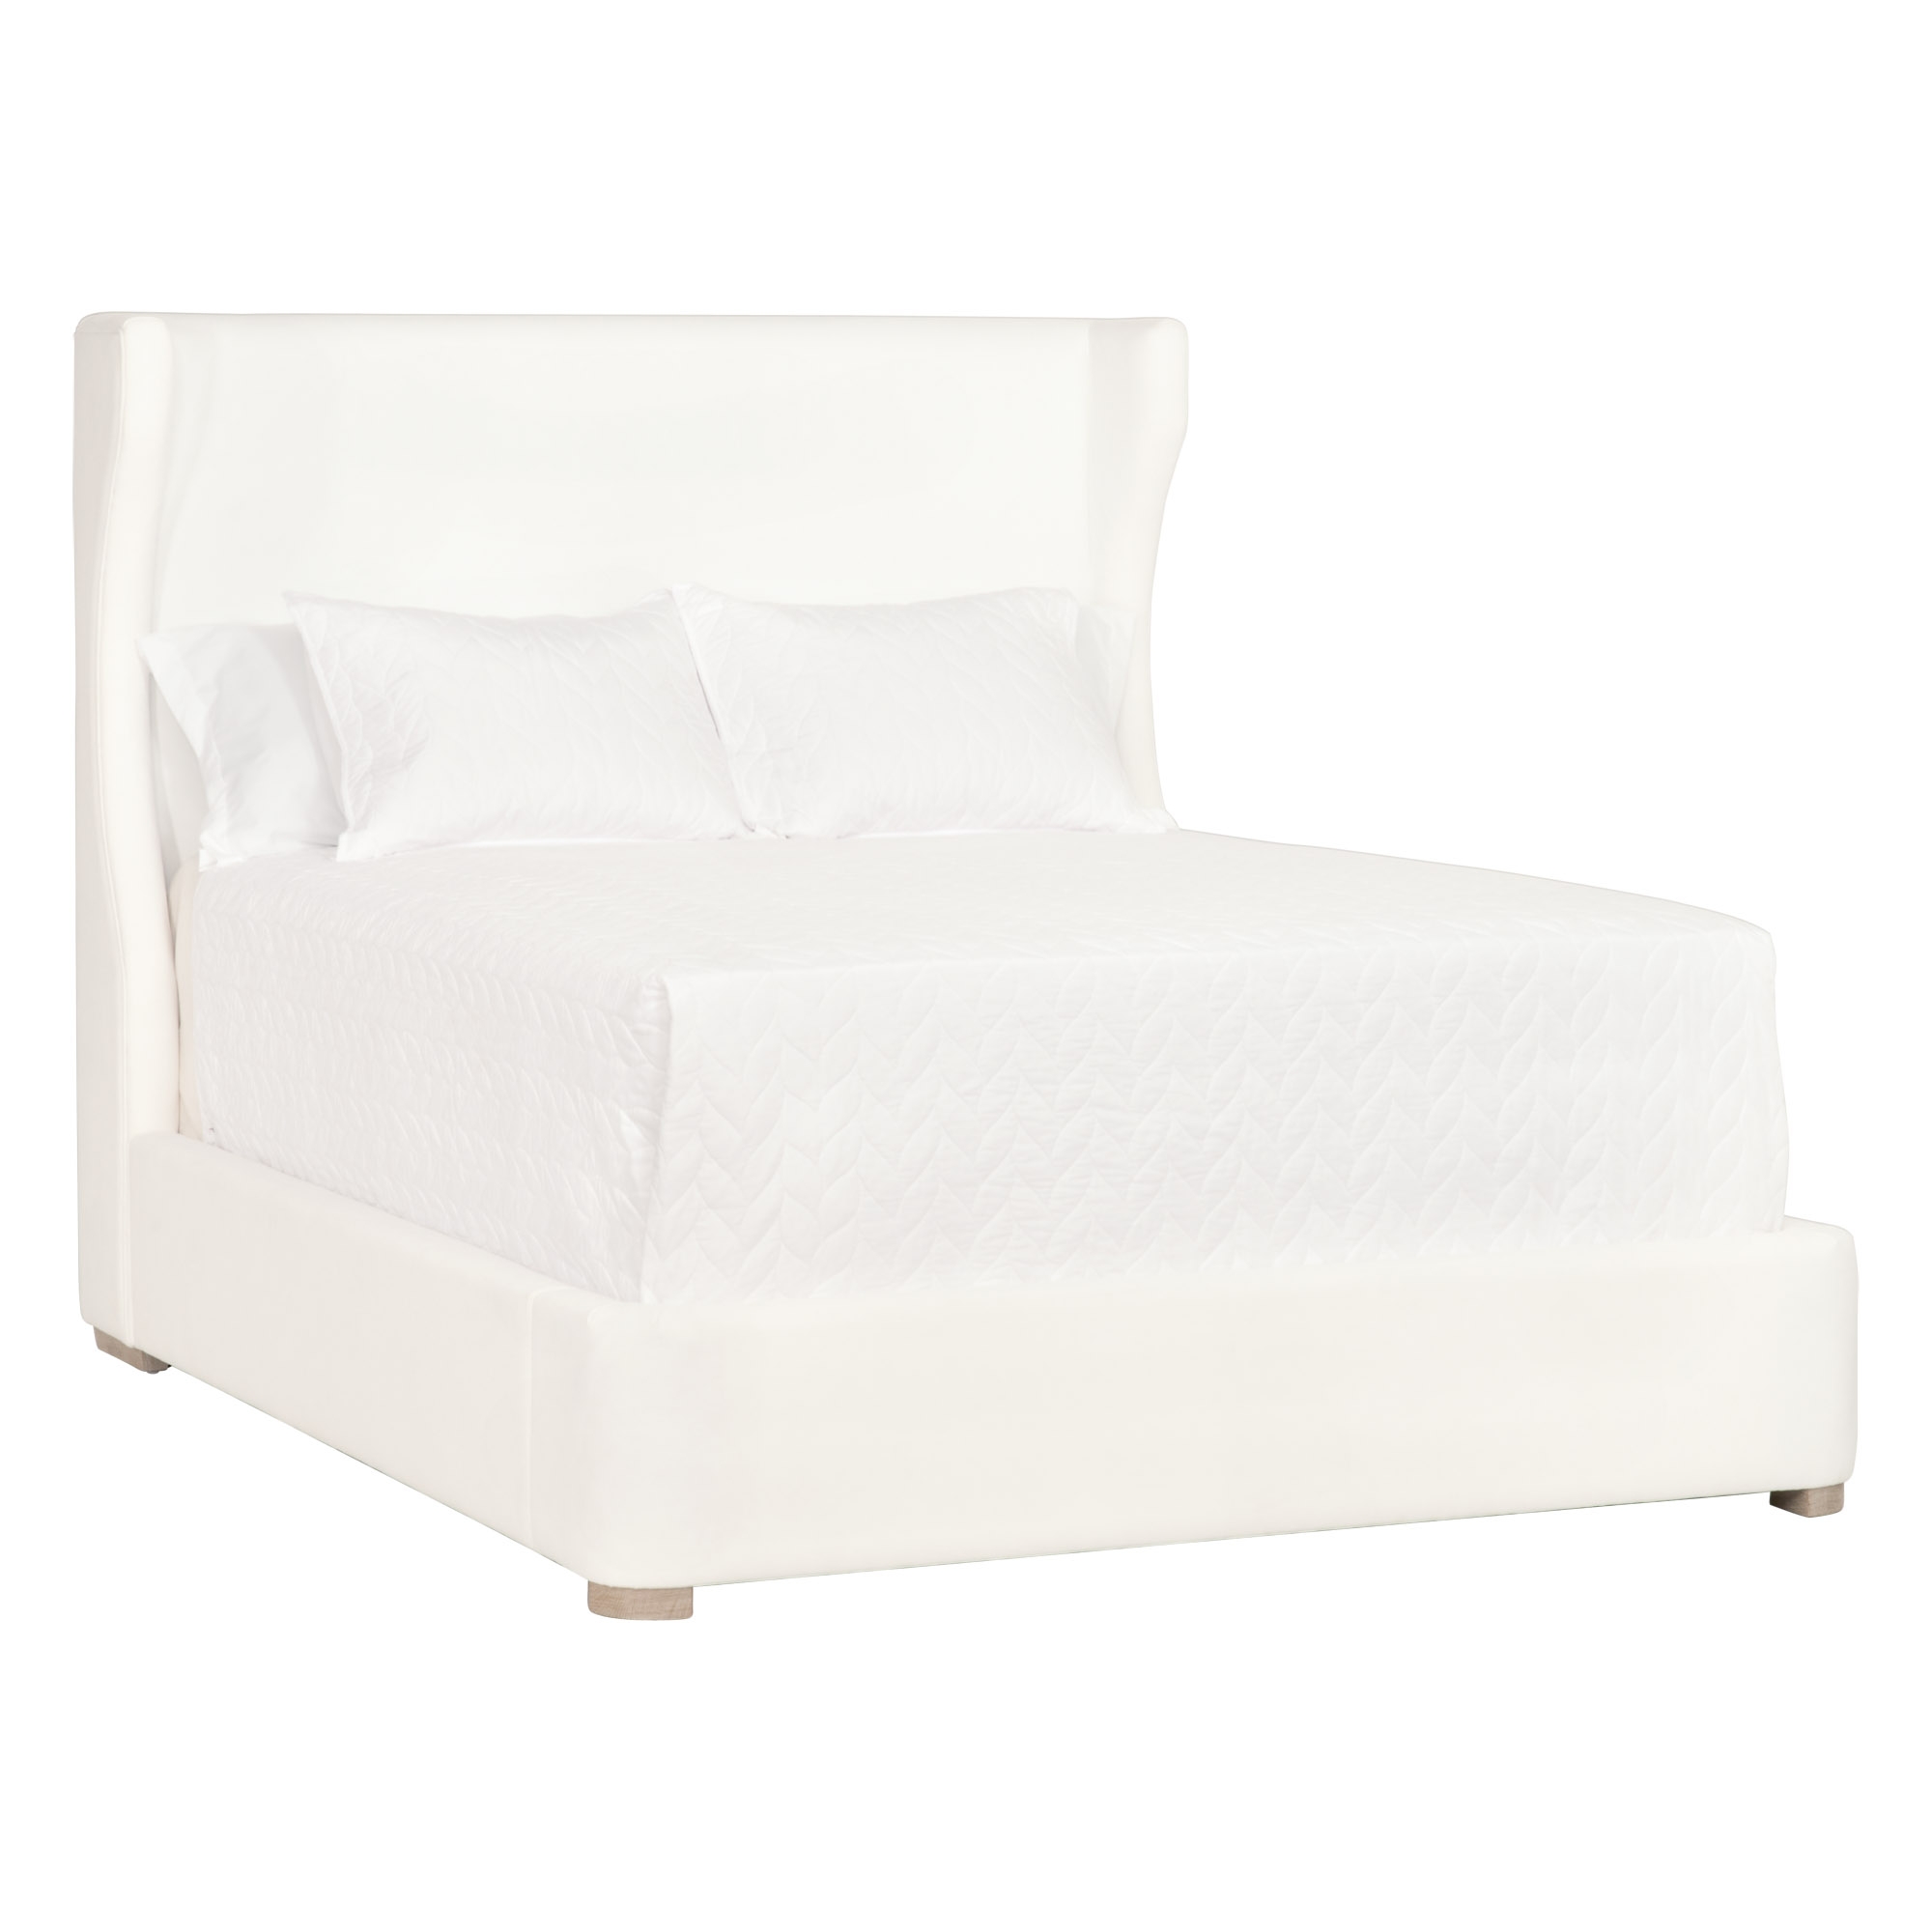 Balboa Standard King Bed - Image 1